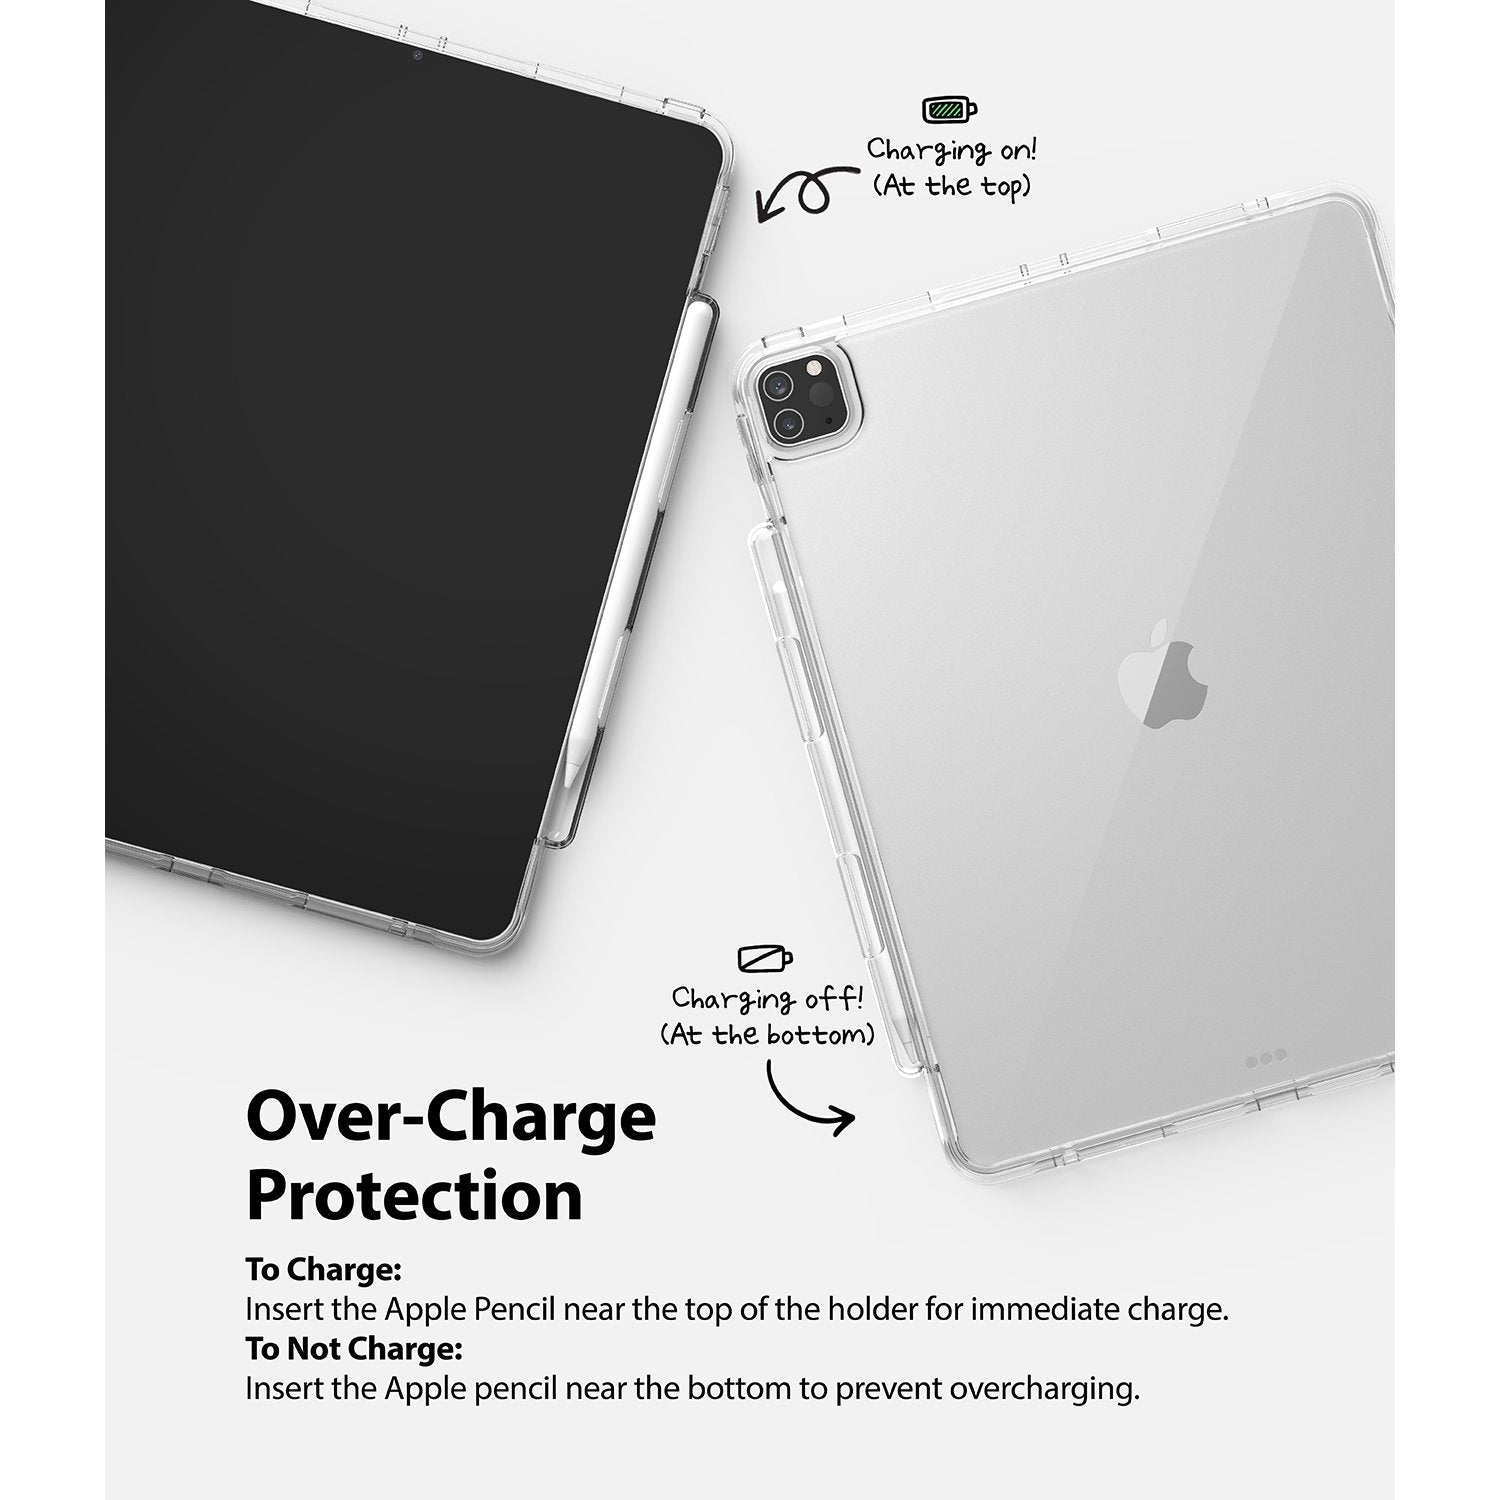 Ringke Fusion+ Case for iPad Pro 12.9" 5th Gen(2021), Smoke Default Ringke 